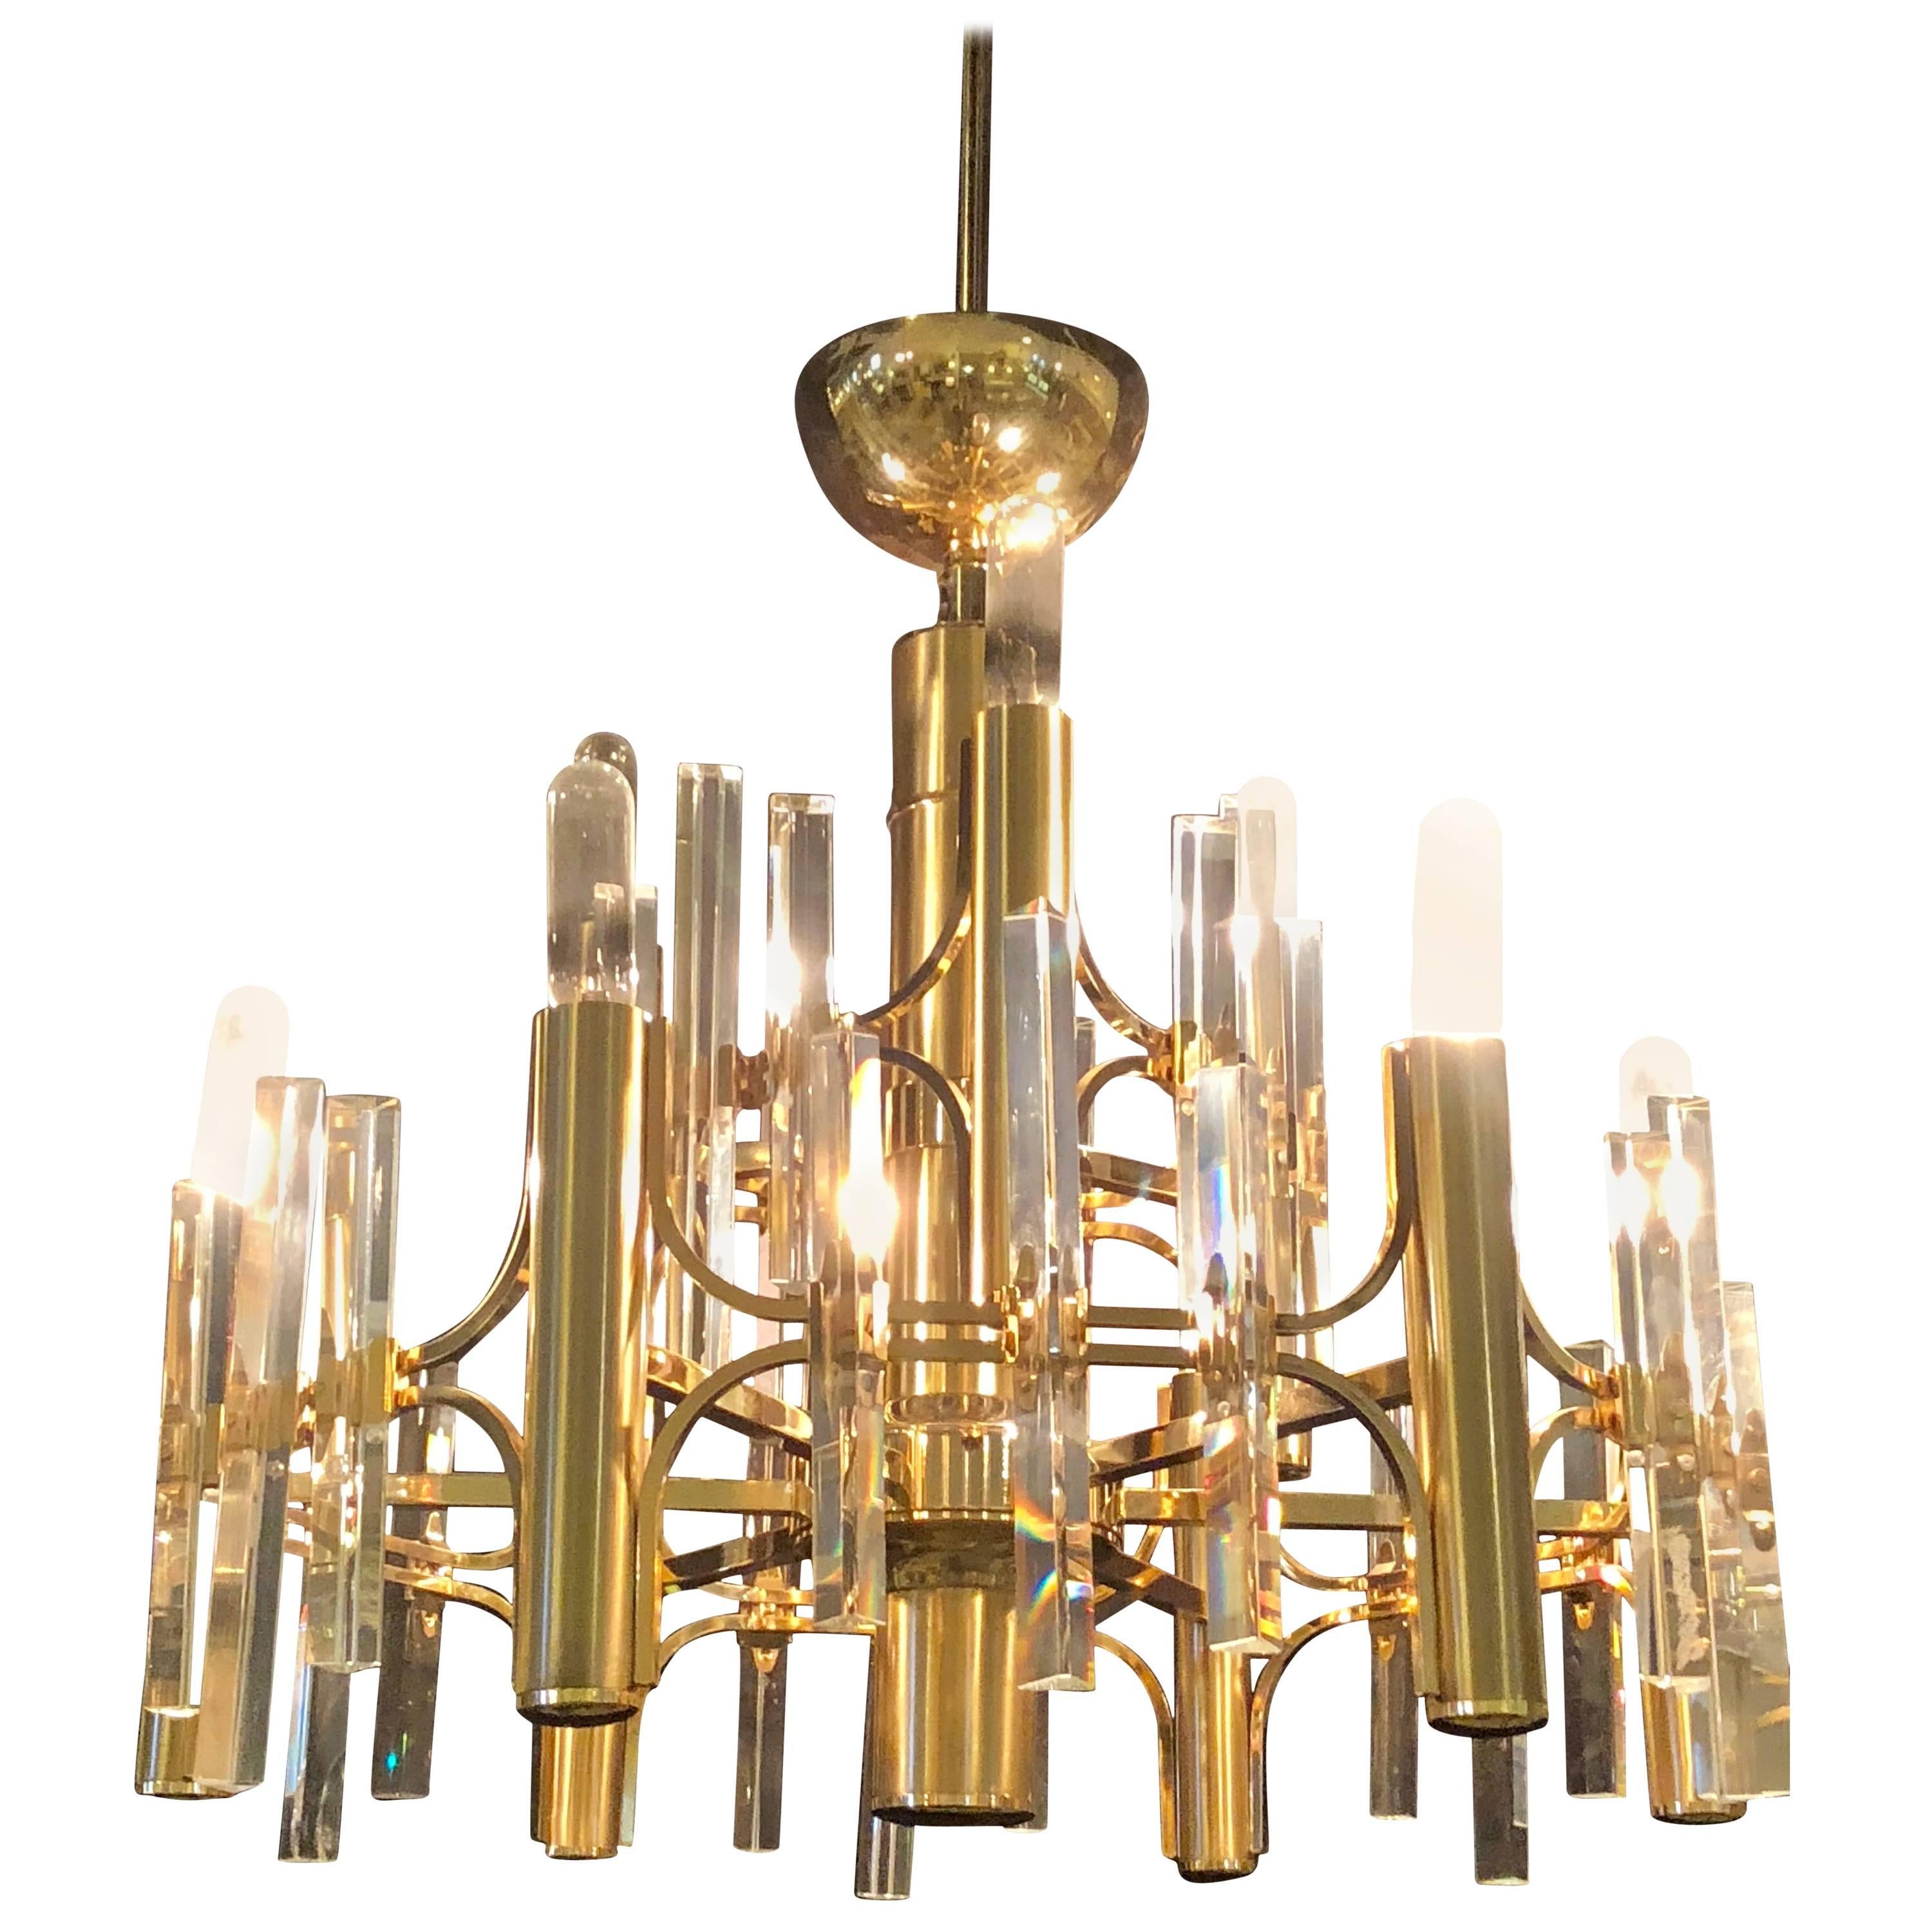 Tommi Parzinger Style Brass Chandelier Cylindrical Lights Crystal Prisms